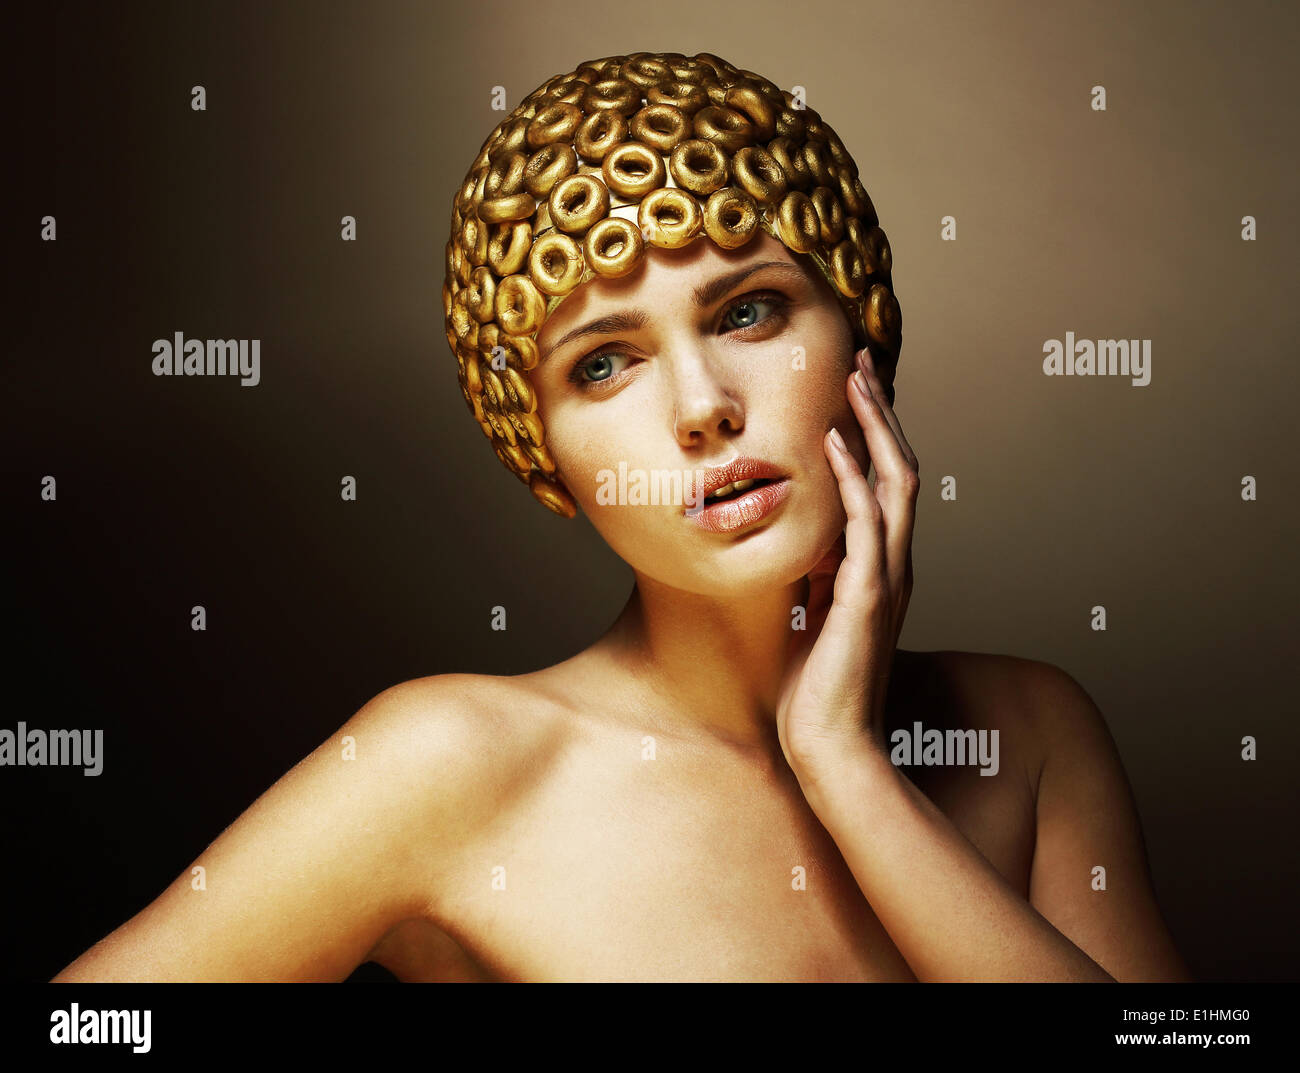 Creativity. Surreal Portrait of Stylized Woman with Golden Headwear as a Helmet Stock Photo